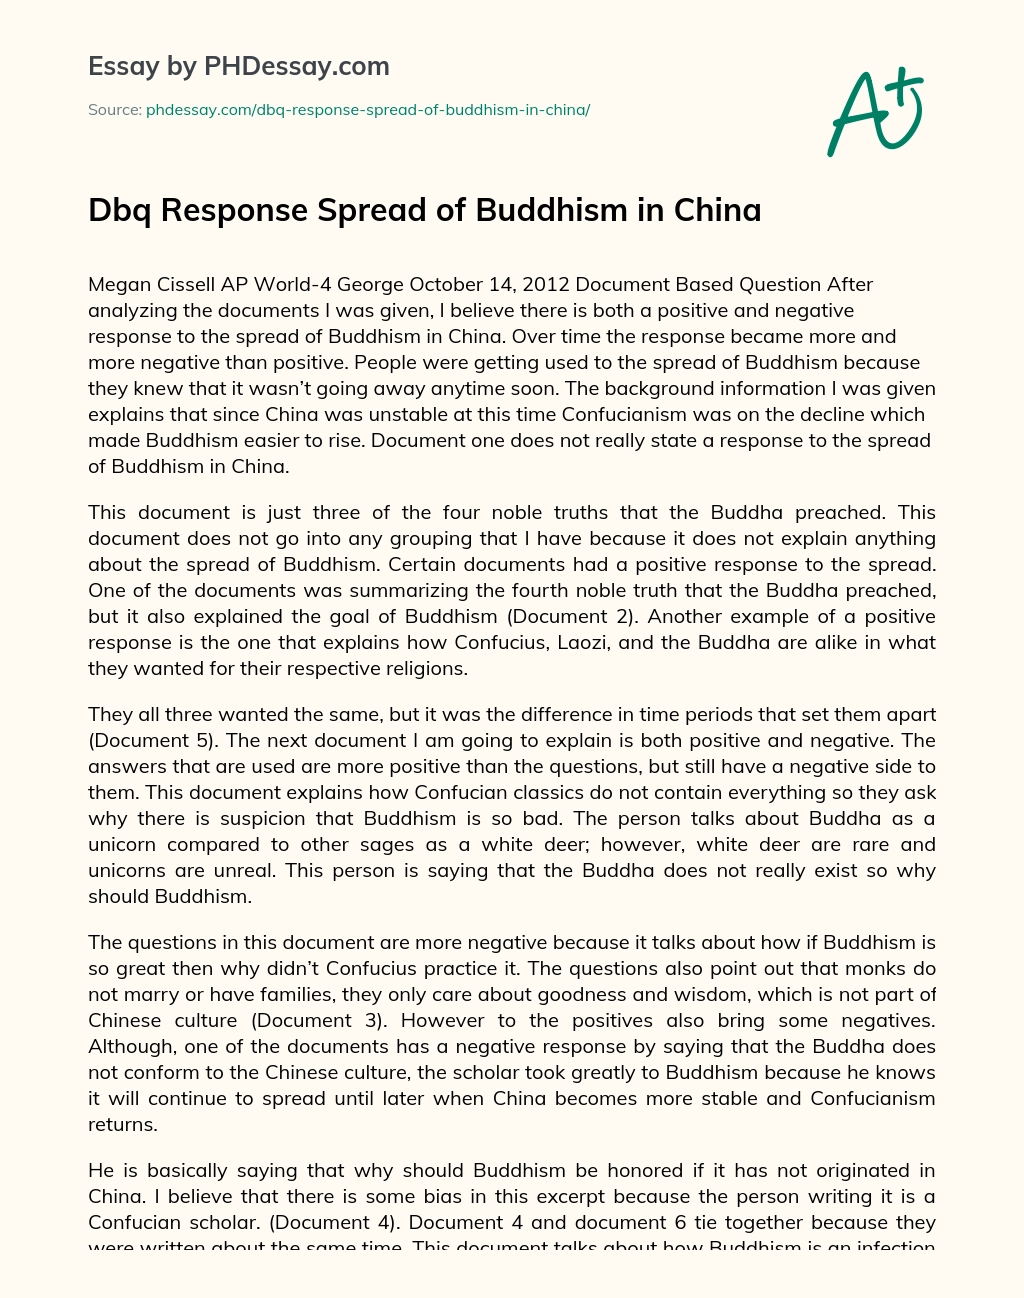 Dbq Response Spread of Buddhism in China essay